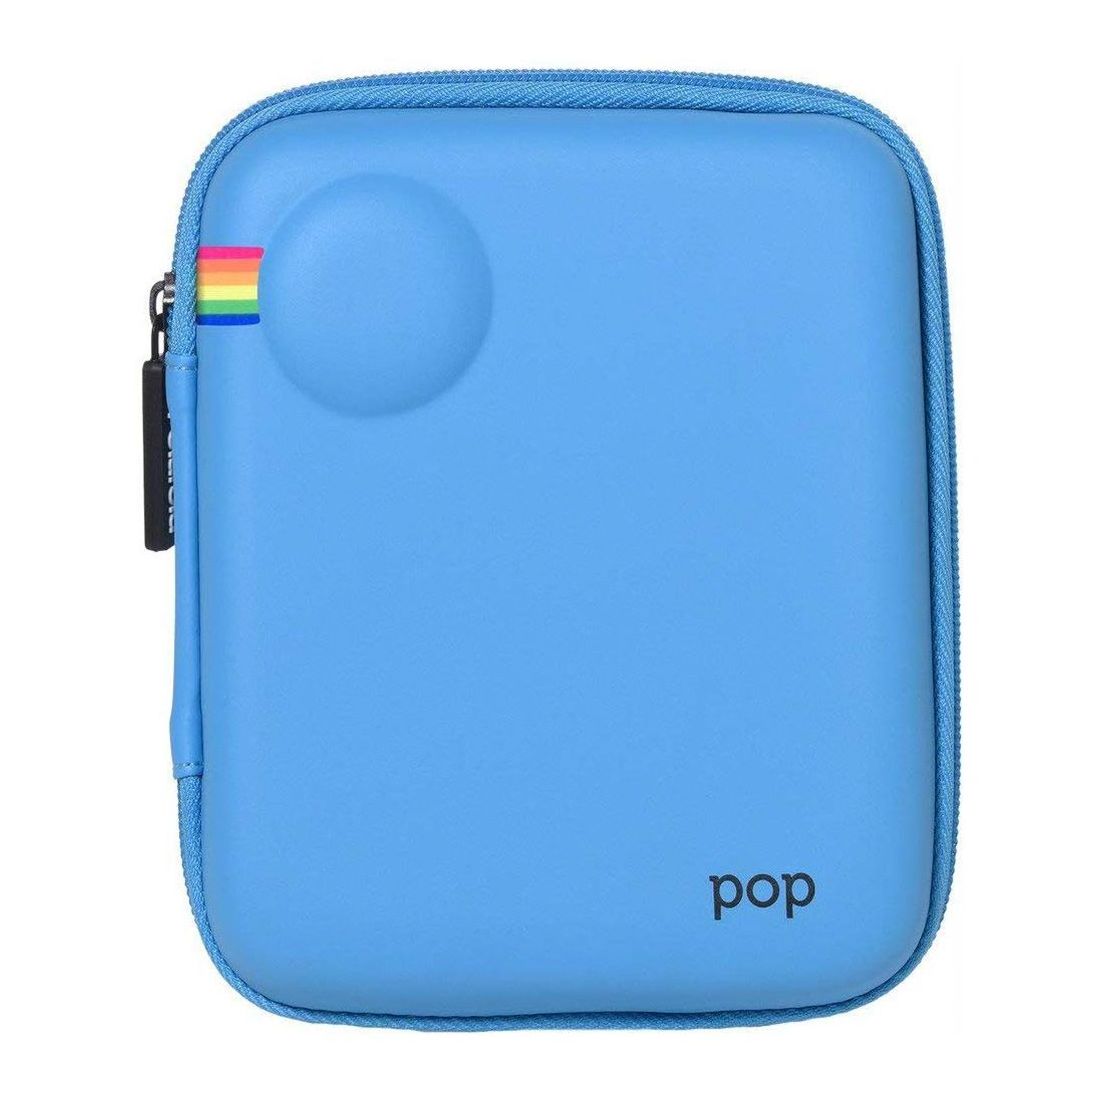 Polaroid Pop Instant Digital Camera Blue + Polaroid Snap for Smartphones